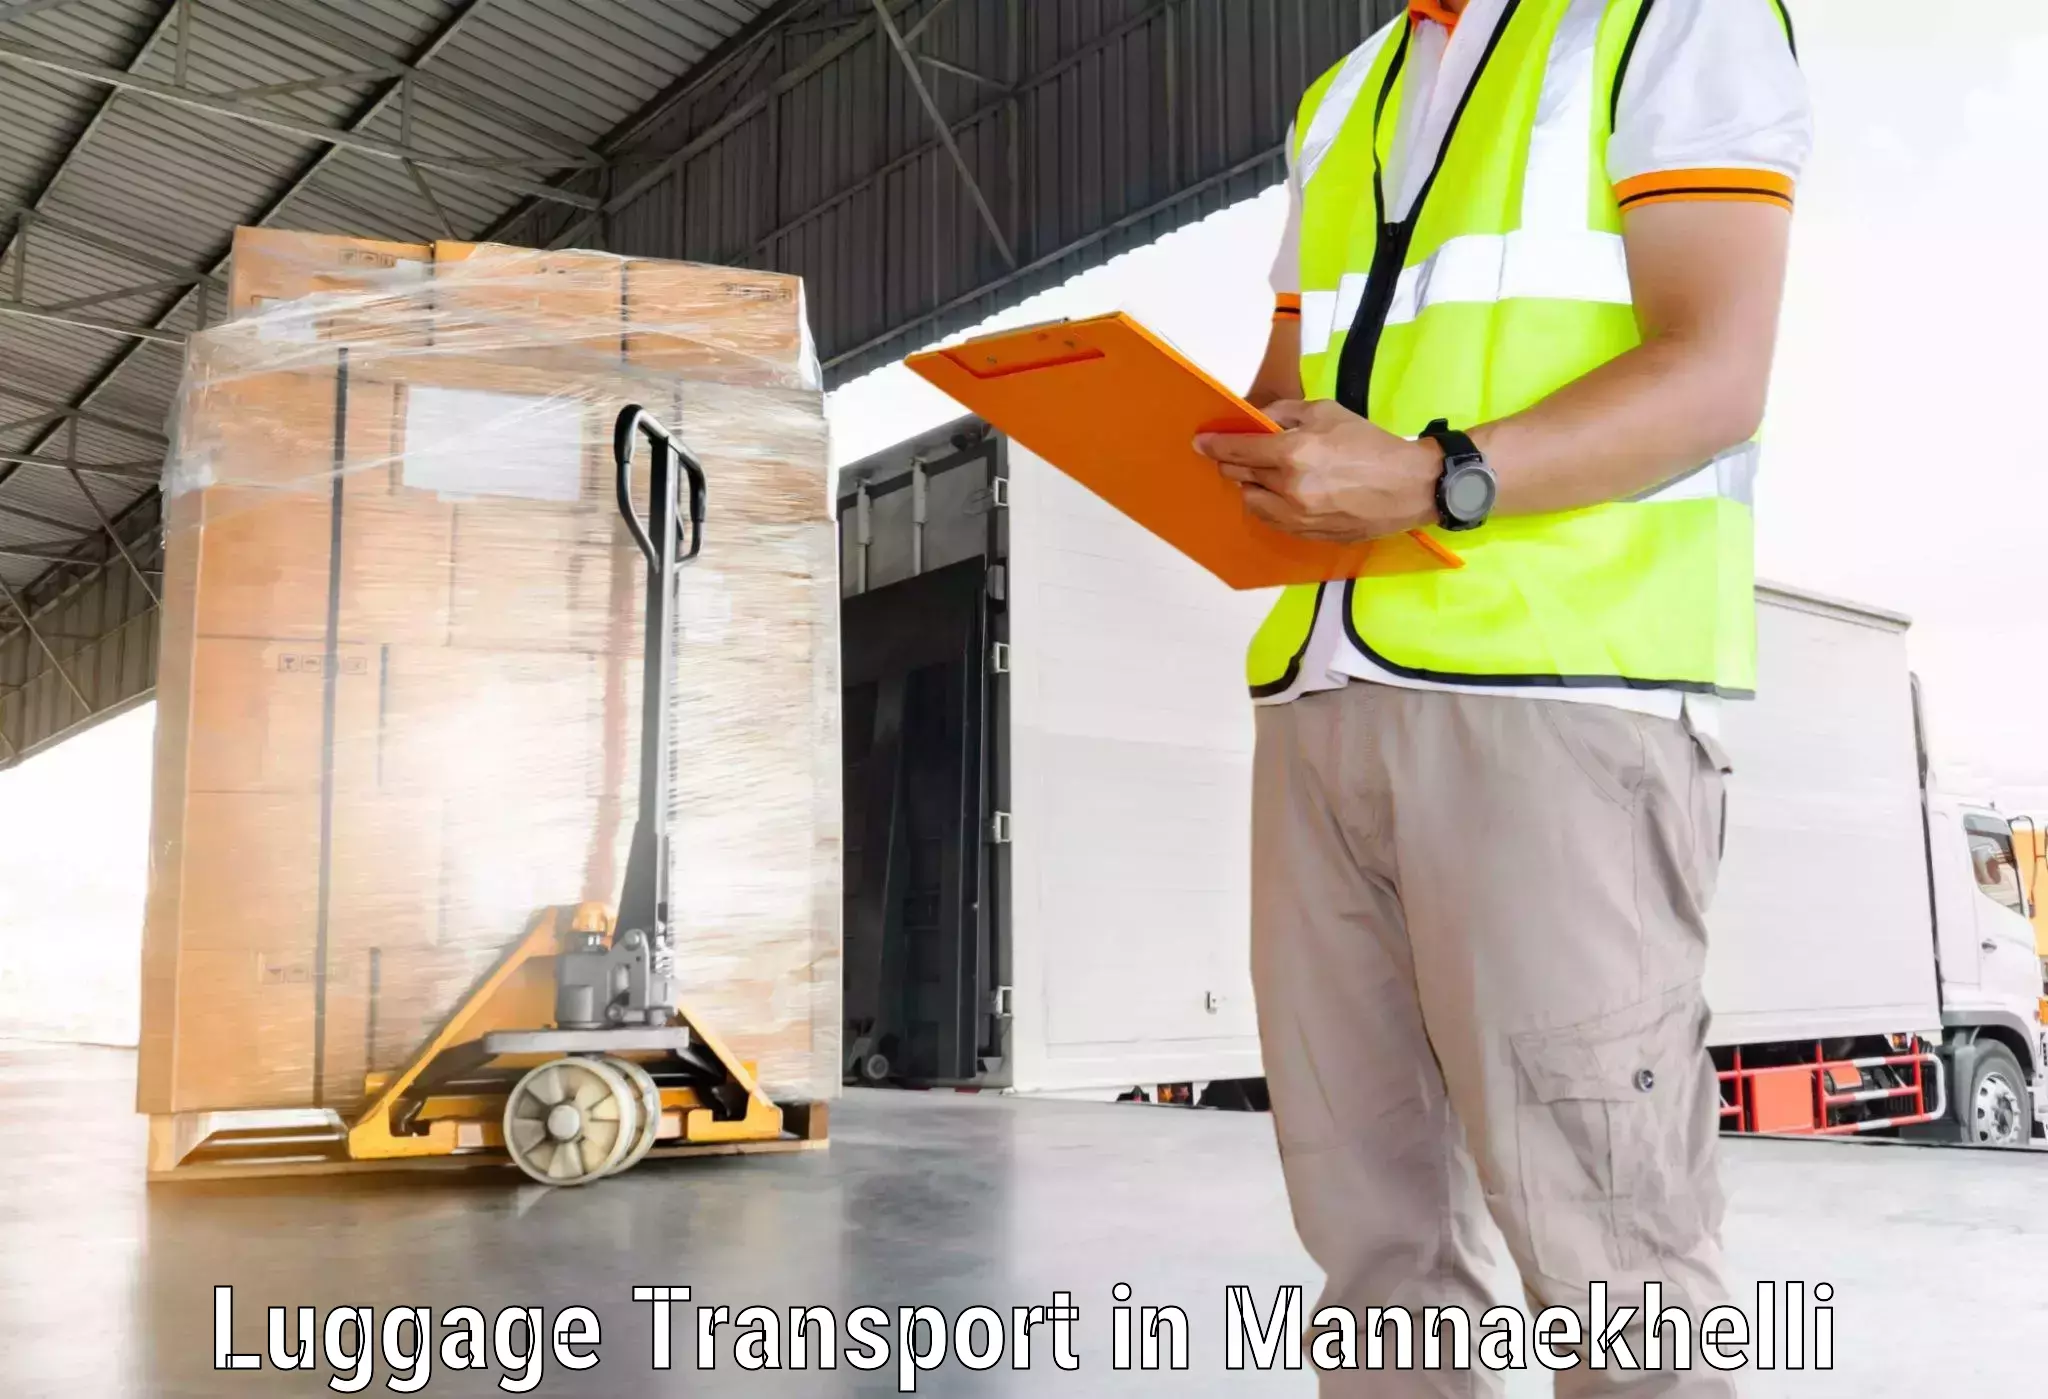 Luggage transport logistics in Mannaekhelli